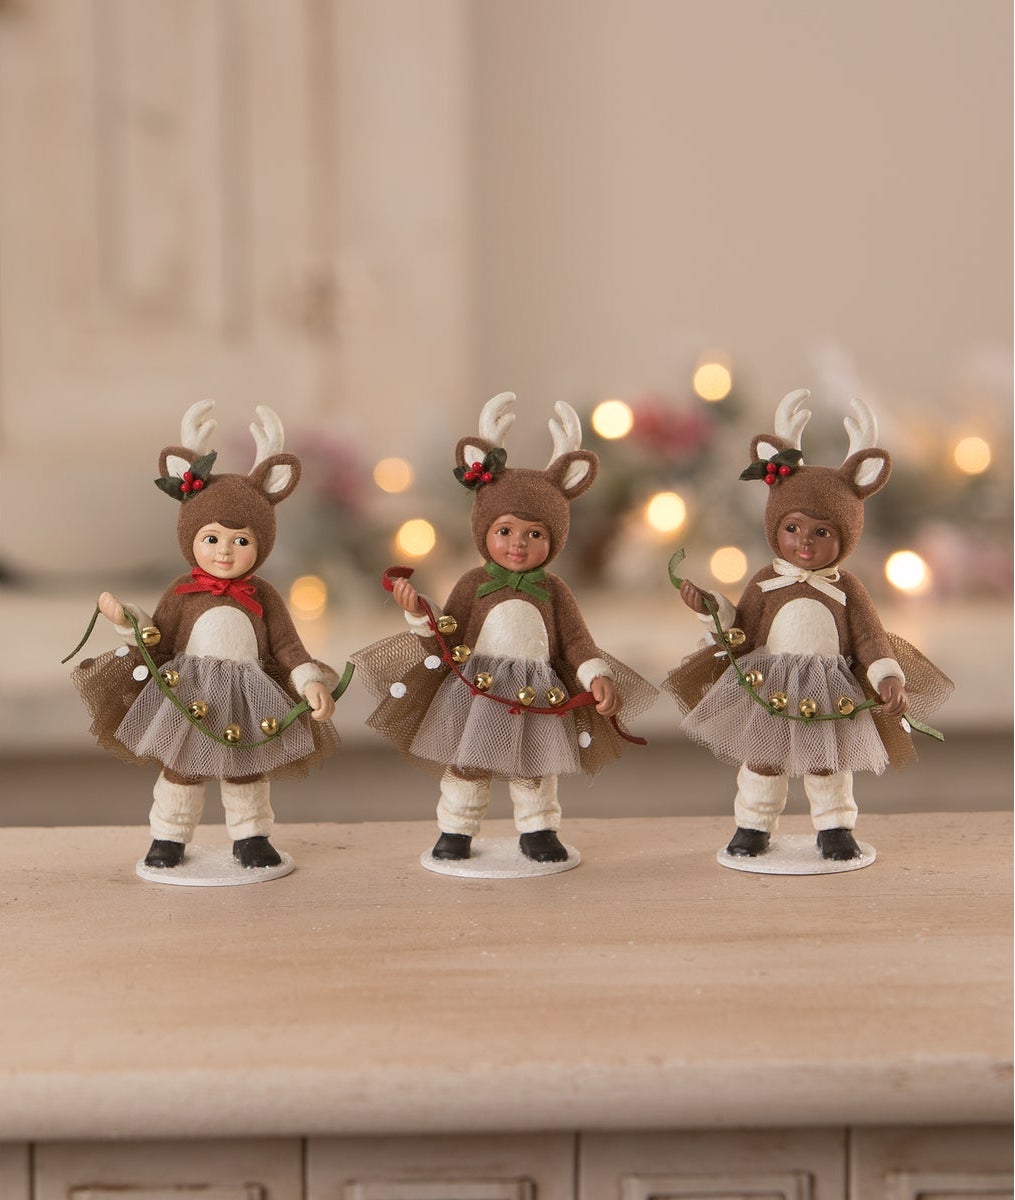 Girls Dressed in Reindeer Costume, Christmas Figurines by Bethany Lowe